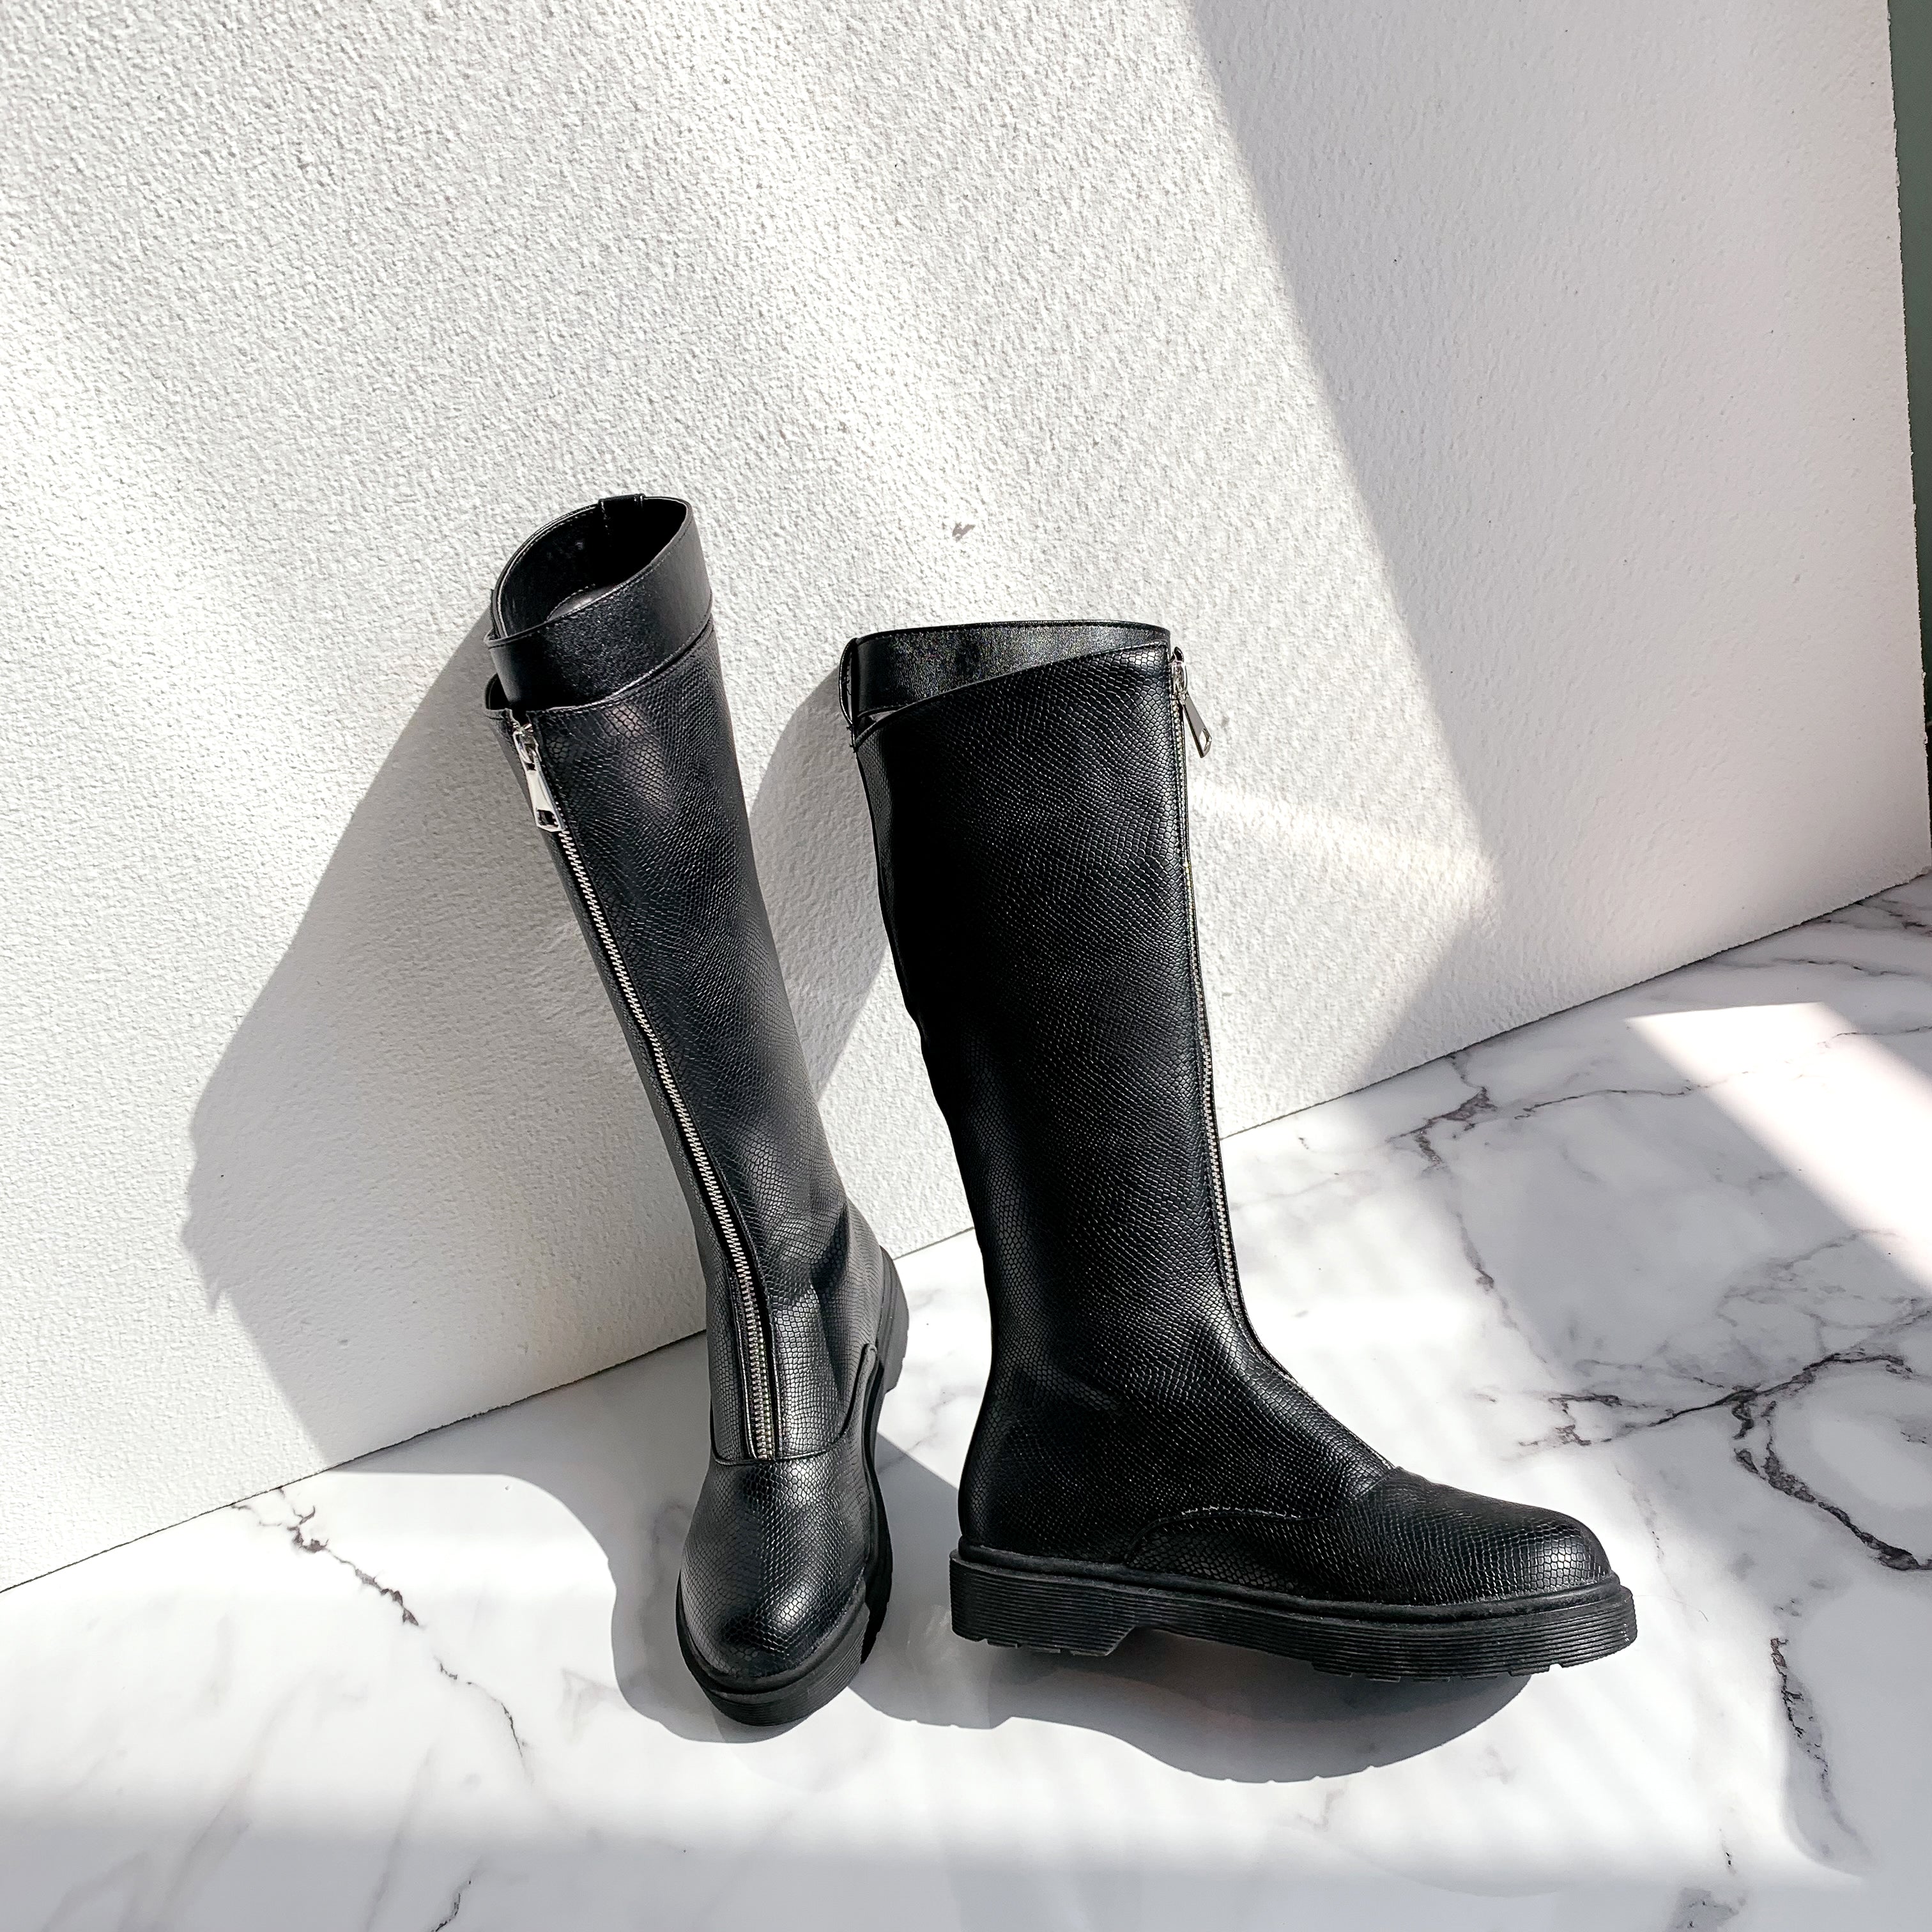 Bigsizeheels Fashion leggings and flat boots - Black freeshipping - bigsizeheel®-size5-size15 -All Plus Sizes Available!